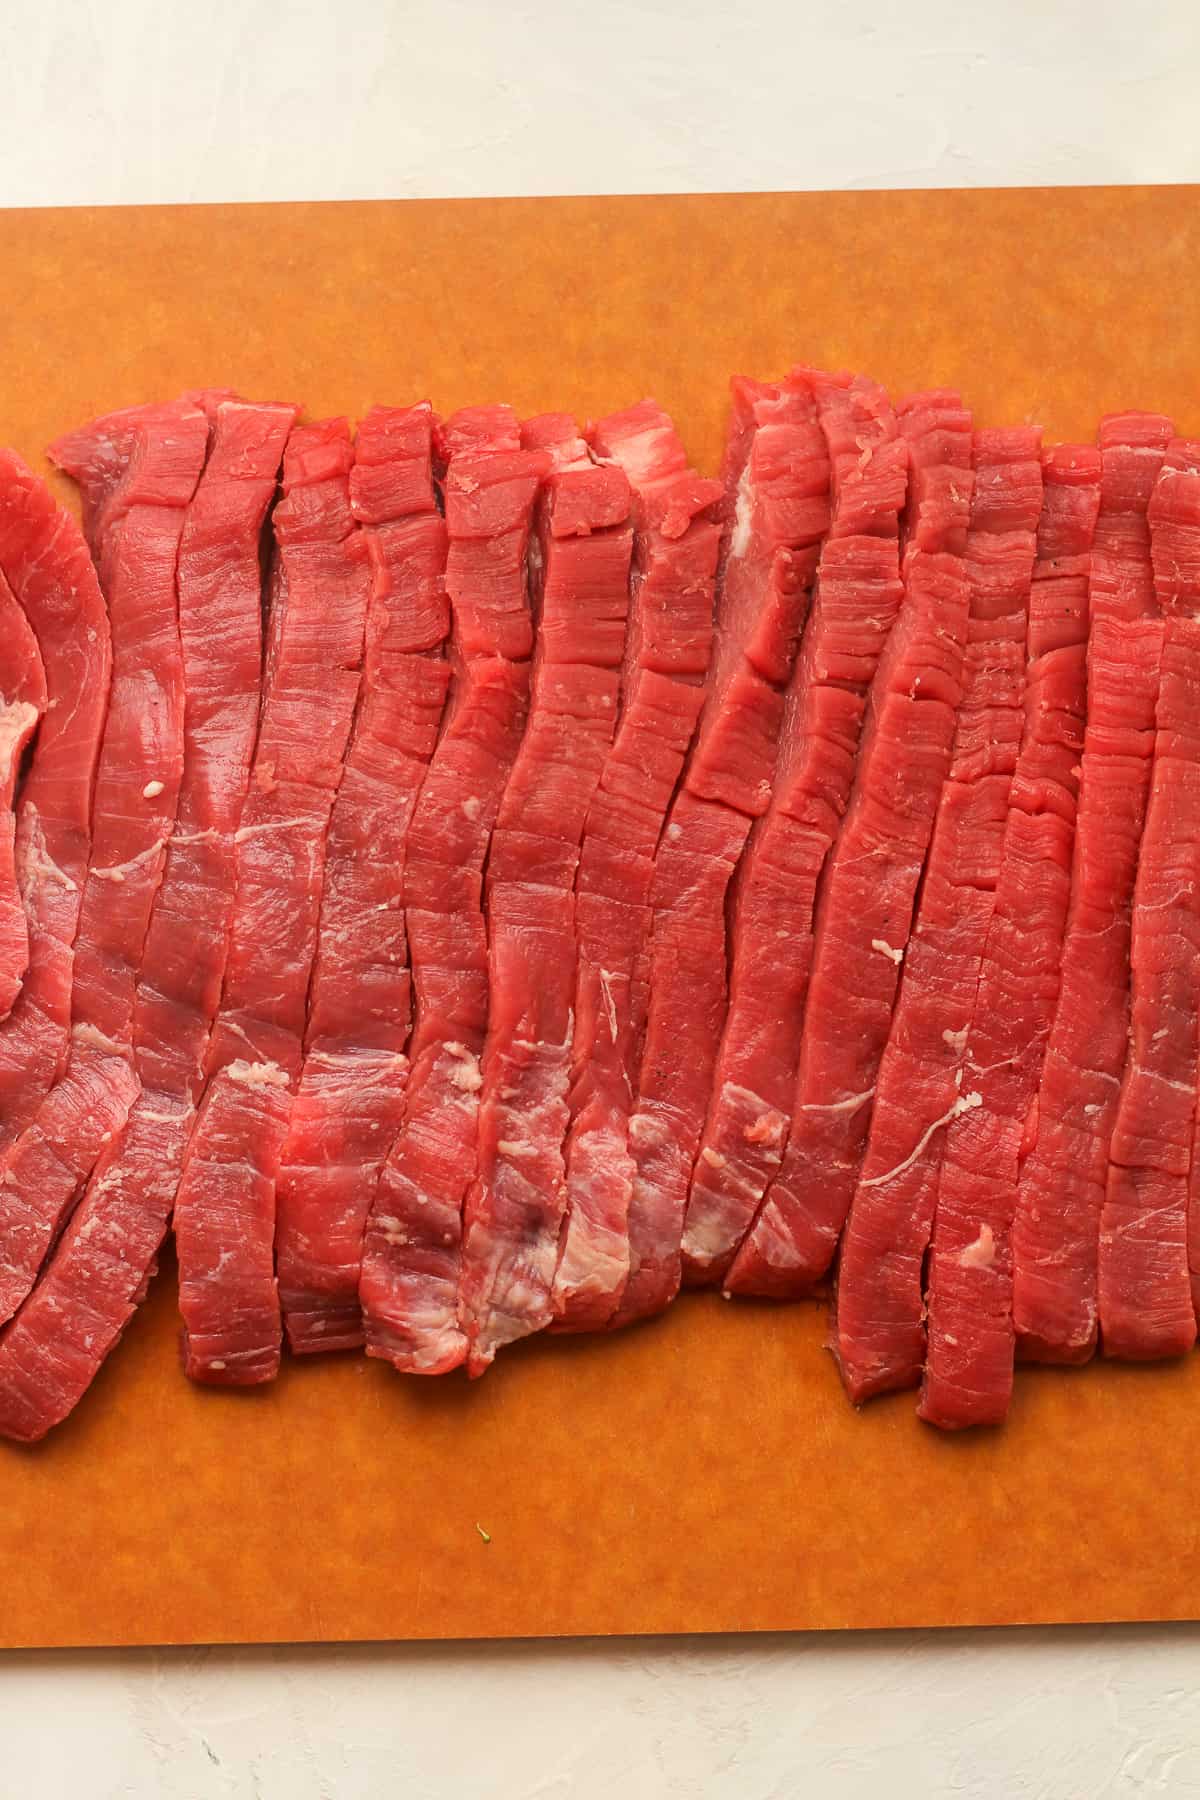 A board of sliced flank steak.